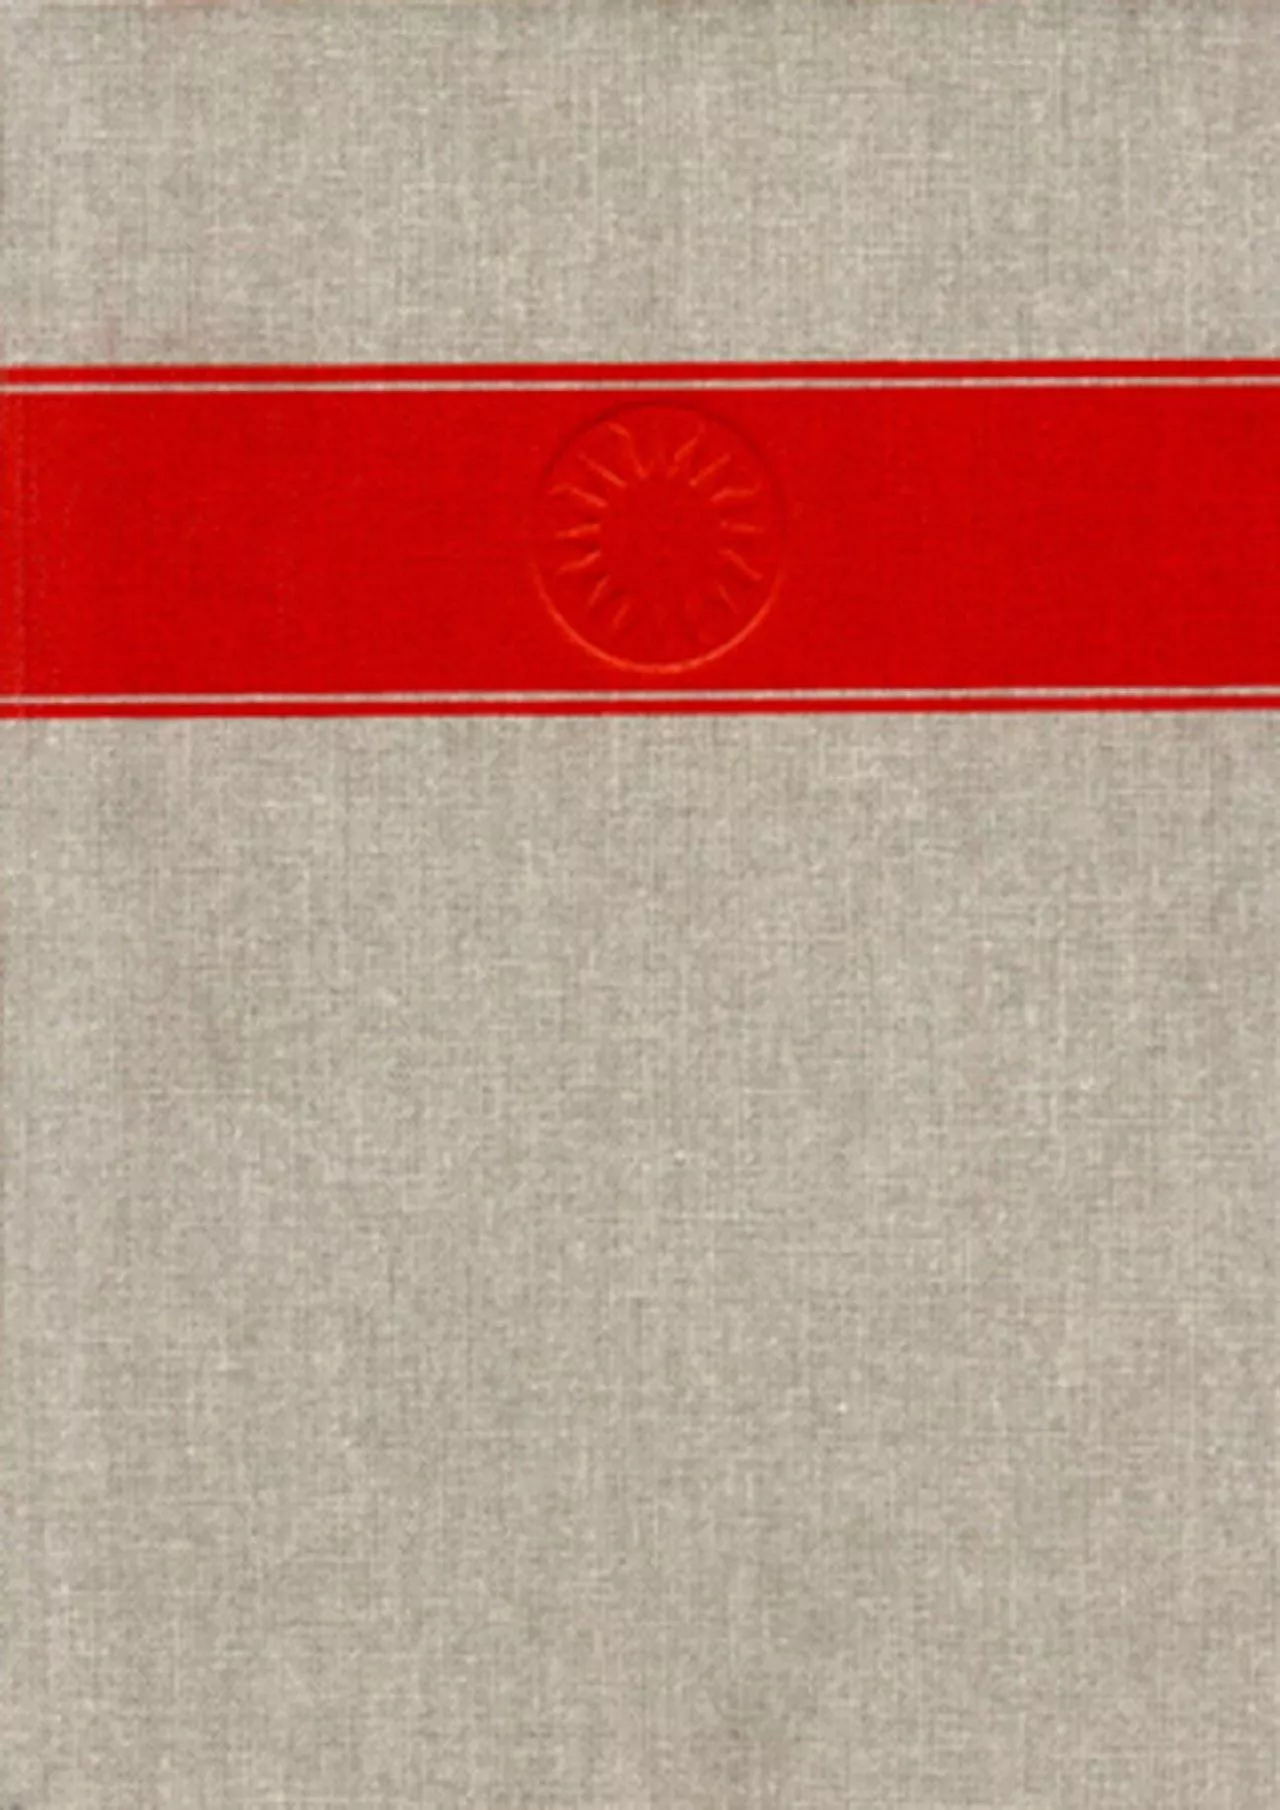 (BOOS)-Handbook of North American Indians, Volume 7: Northwest Coast